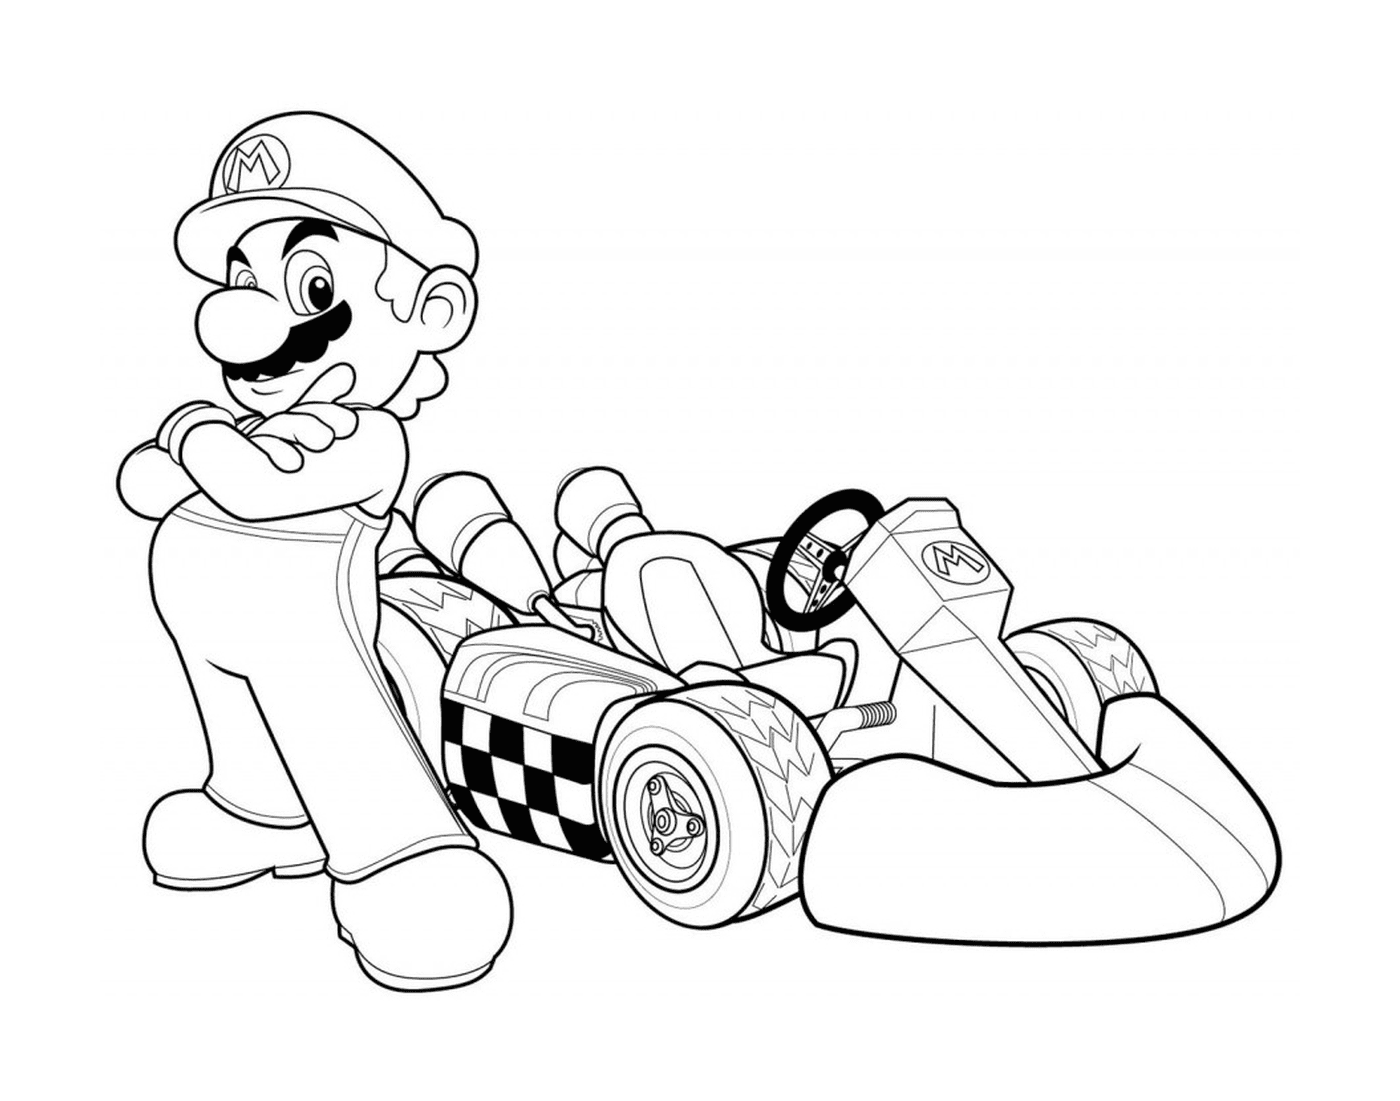  Mario Kart, a Formula One car 